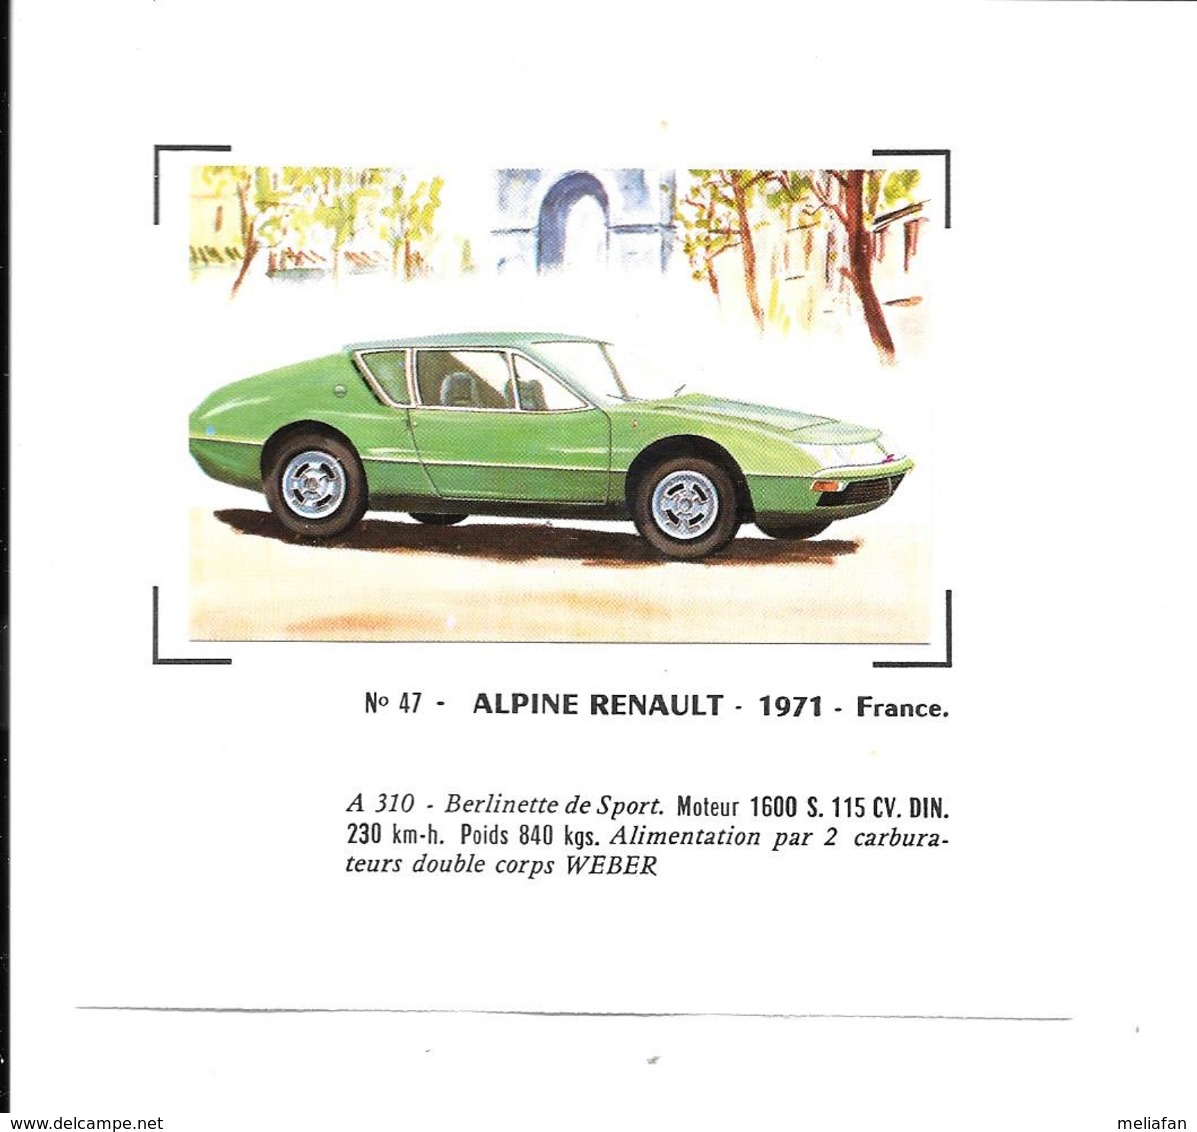 BW83 - IMAGE CHADENAC - ALPINE RENAULT - COLLEE SUR PAPIER - Cars